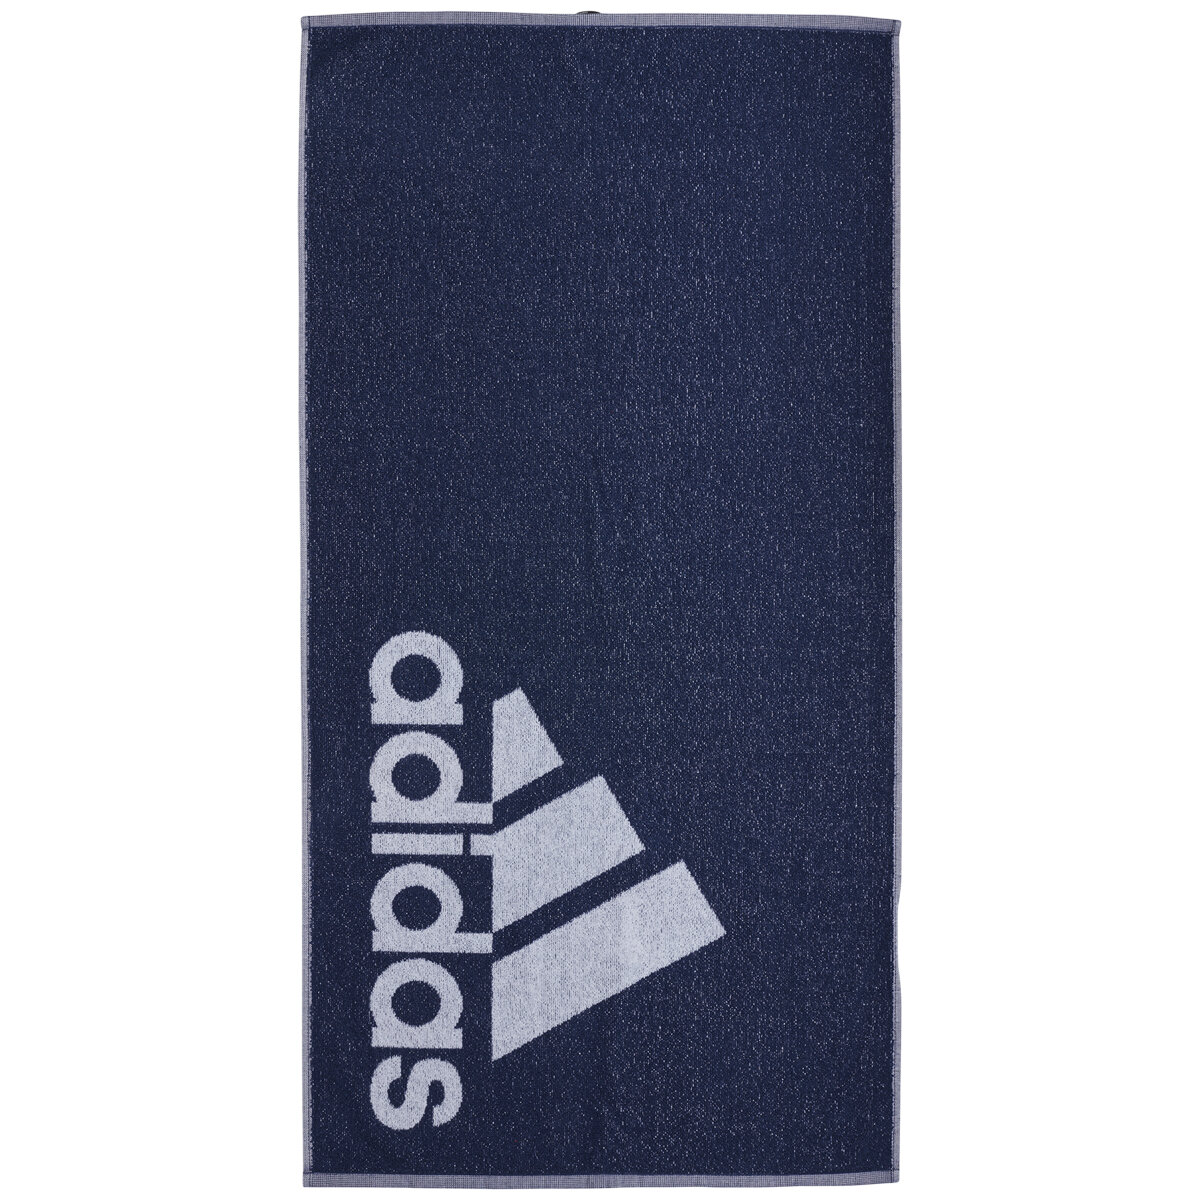 Adidas Small Gym Navy Towel 50 x 100 cm